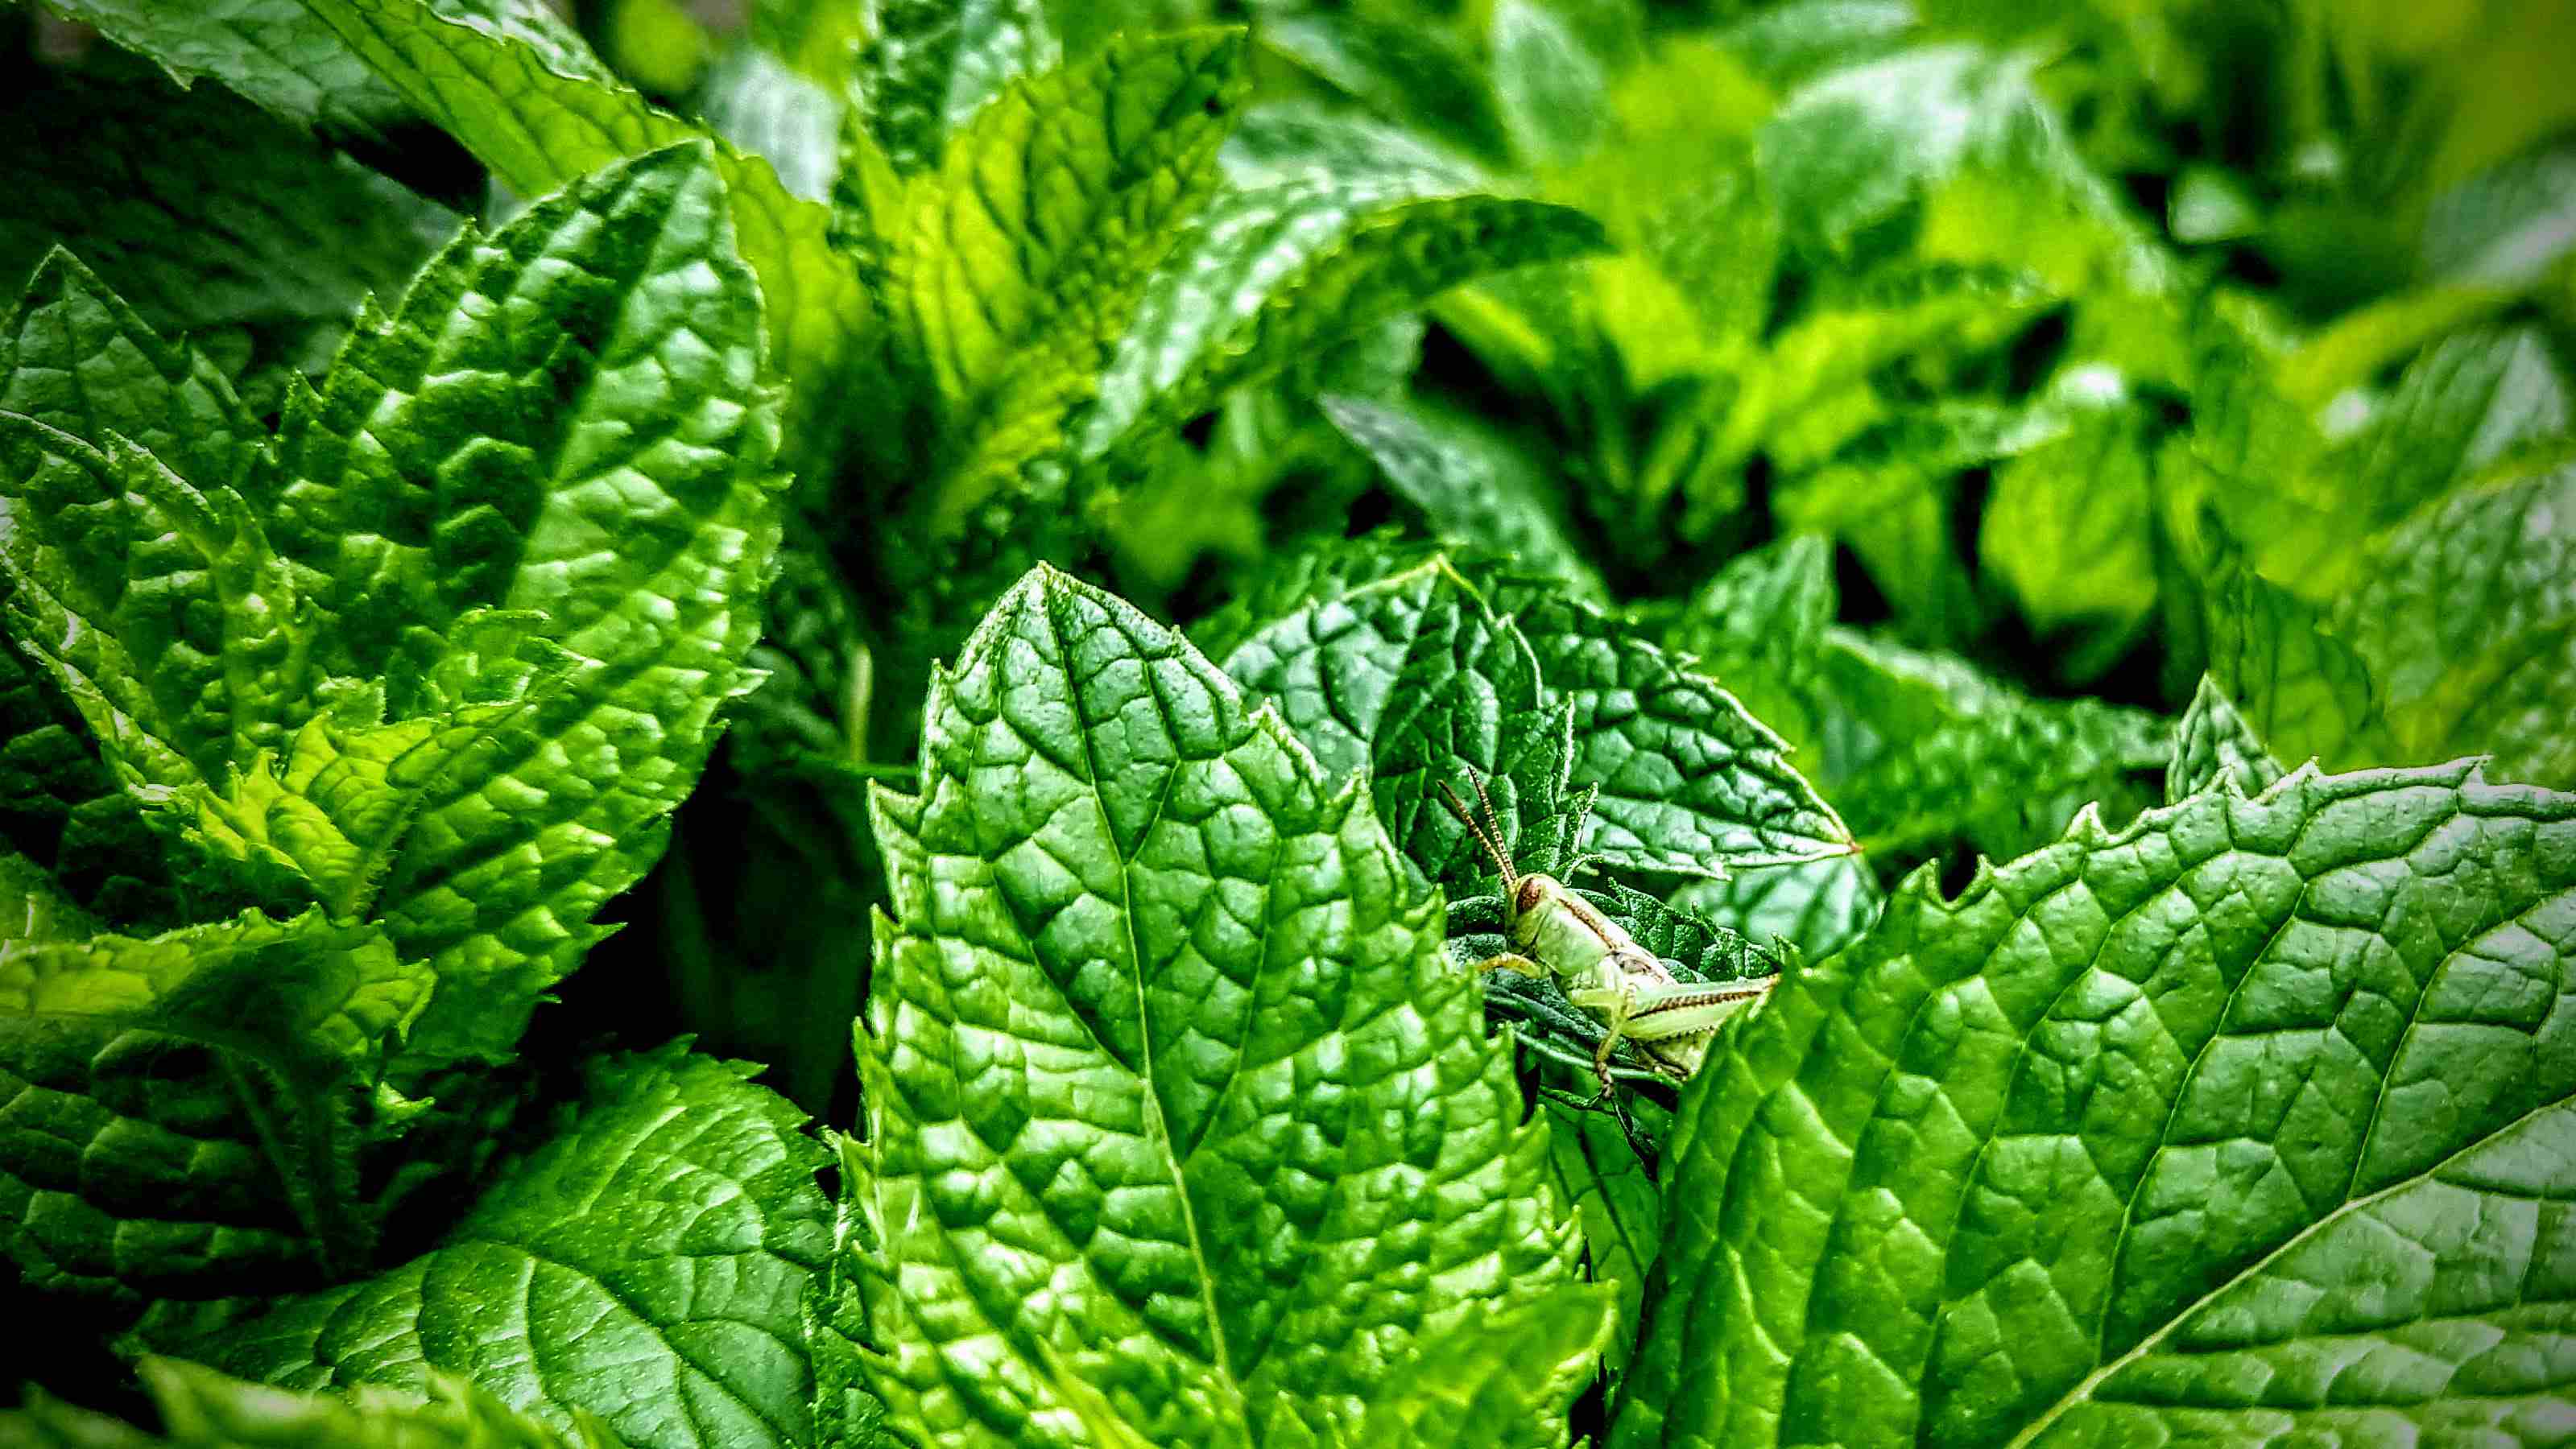 Grasshopper chilling on some Mojito Mint plants